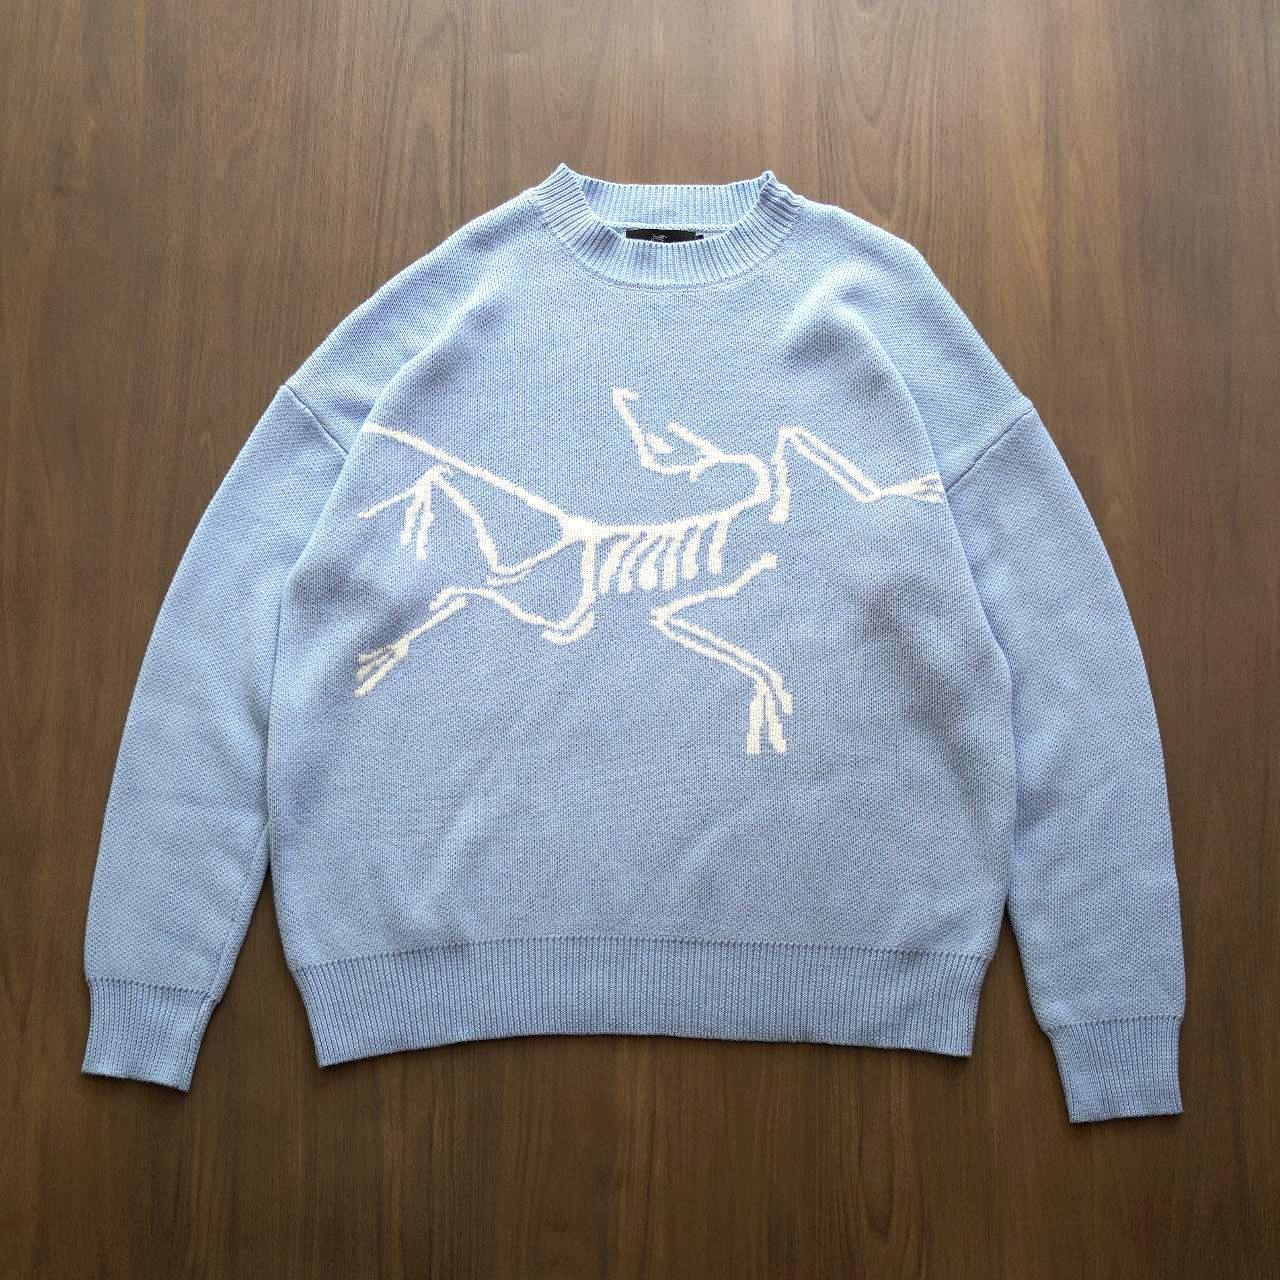 Arcteryx Bird Knit Sweater Very comfortable and... - Depop